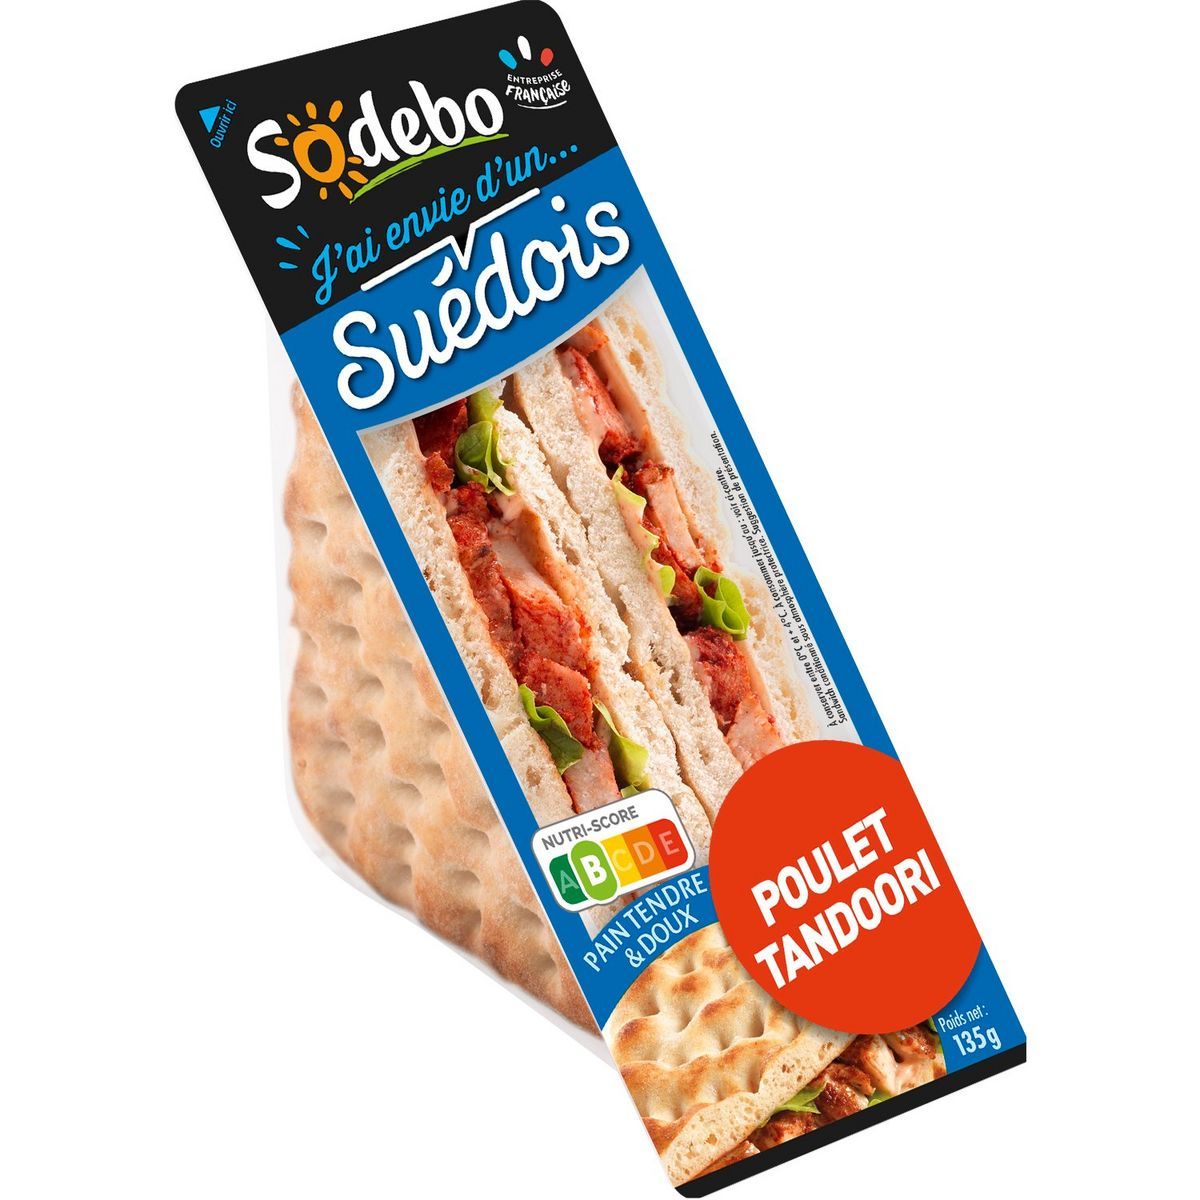 SANDWICH SUÉDOIS SODEBO